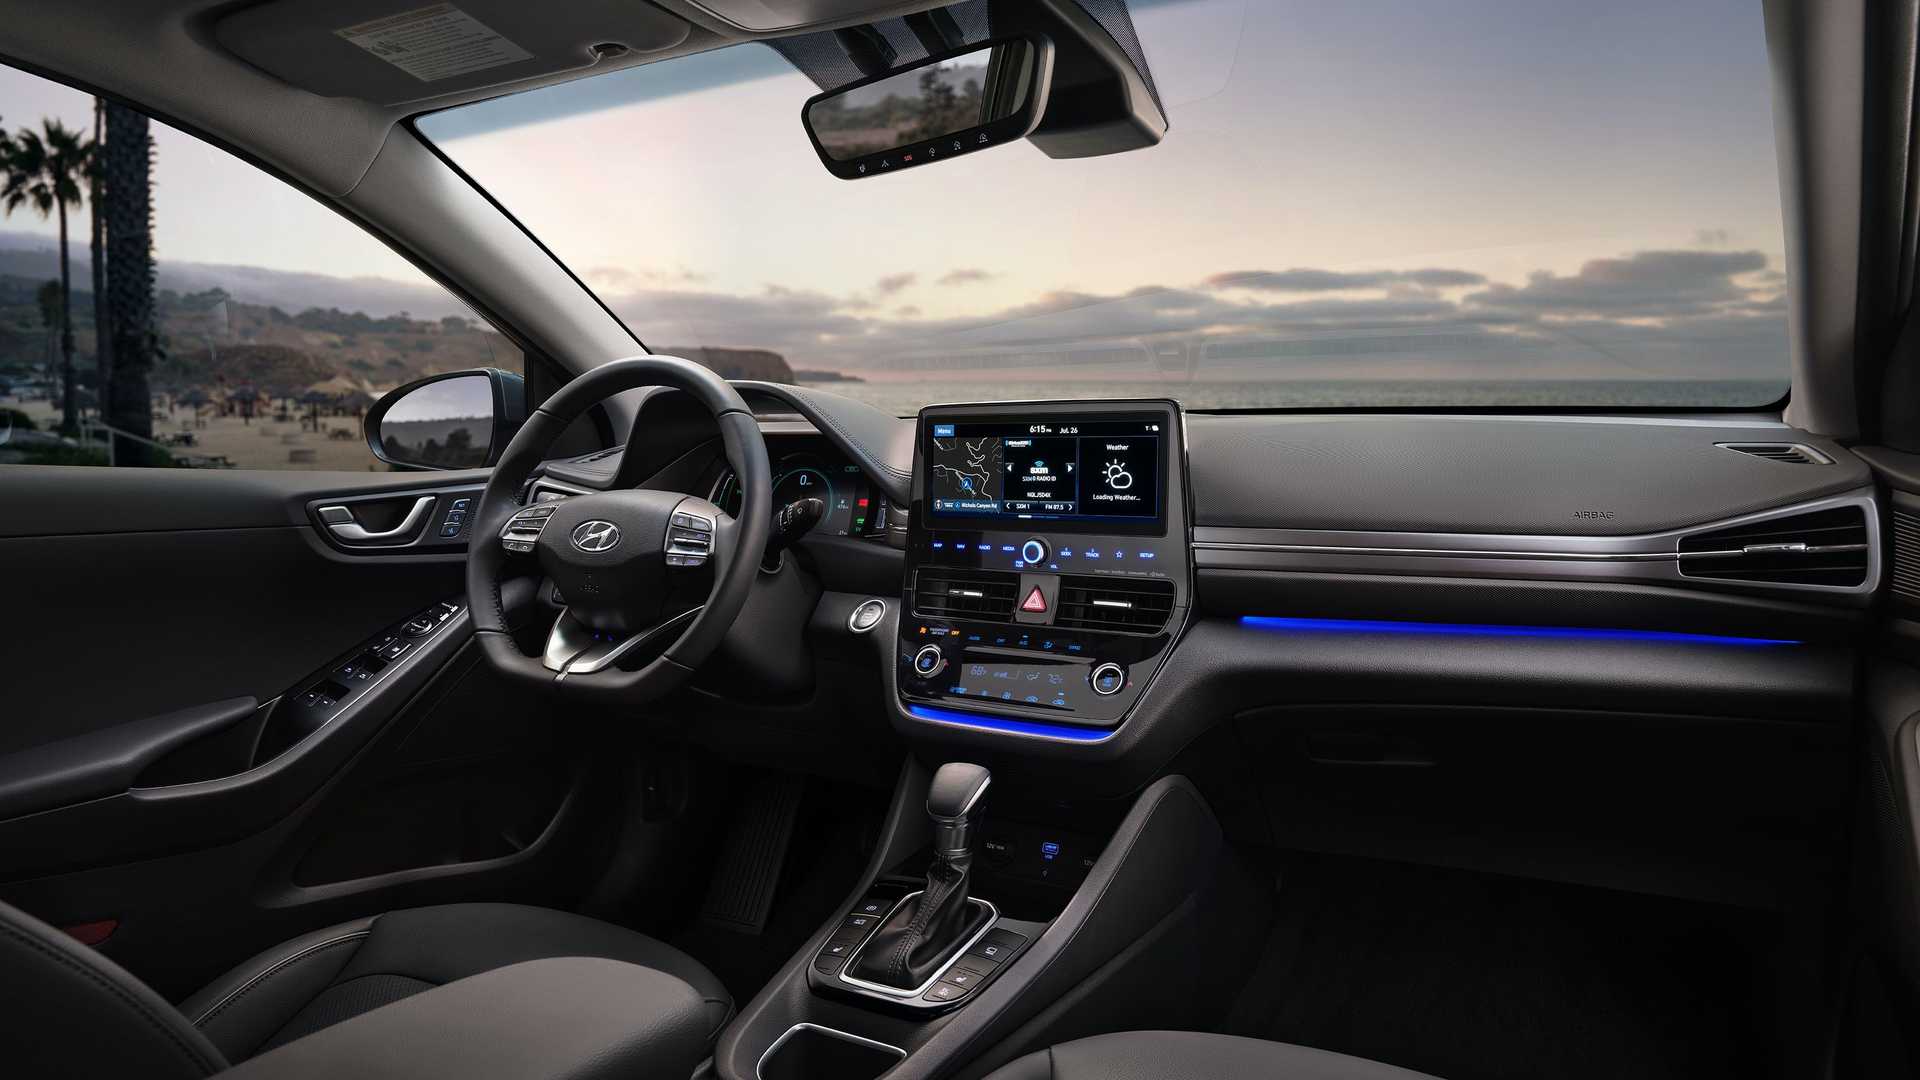 Productiecentrum Aanleg stapel 2020 Hyundai Ioniq Electric Features Larger Battery, 170 Miles of Range -  autoevolution